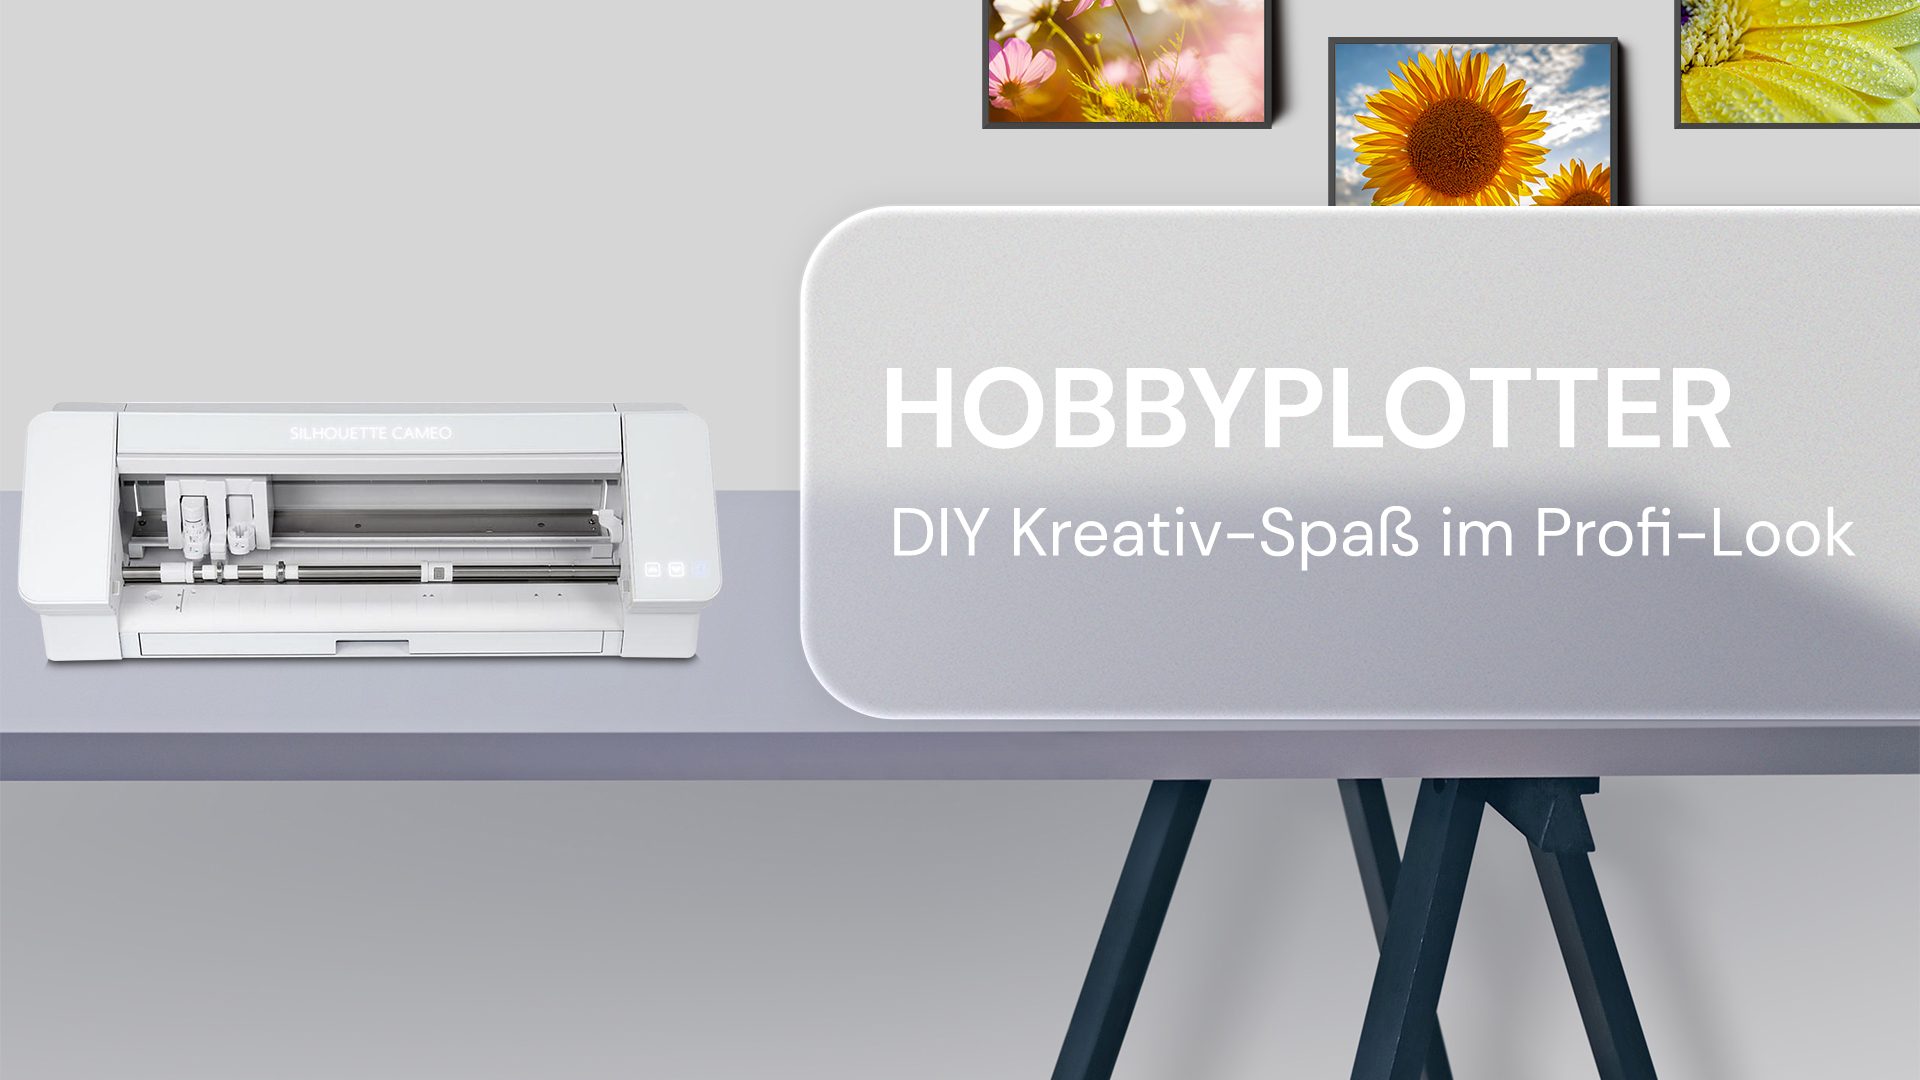 Hobbyplotter: DIY Kreativ-Spaß im Profi-Look @ OFFICE Partner